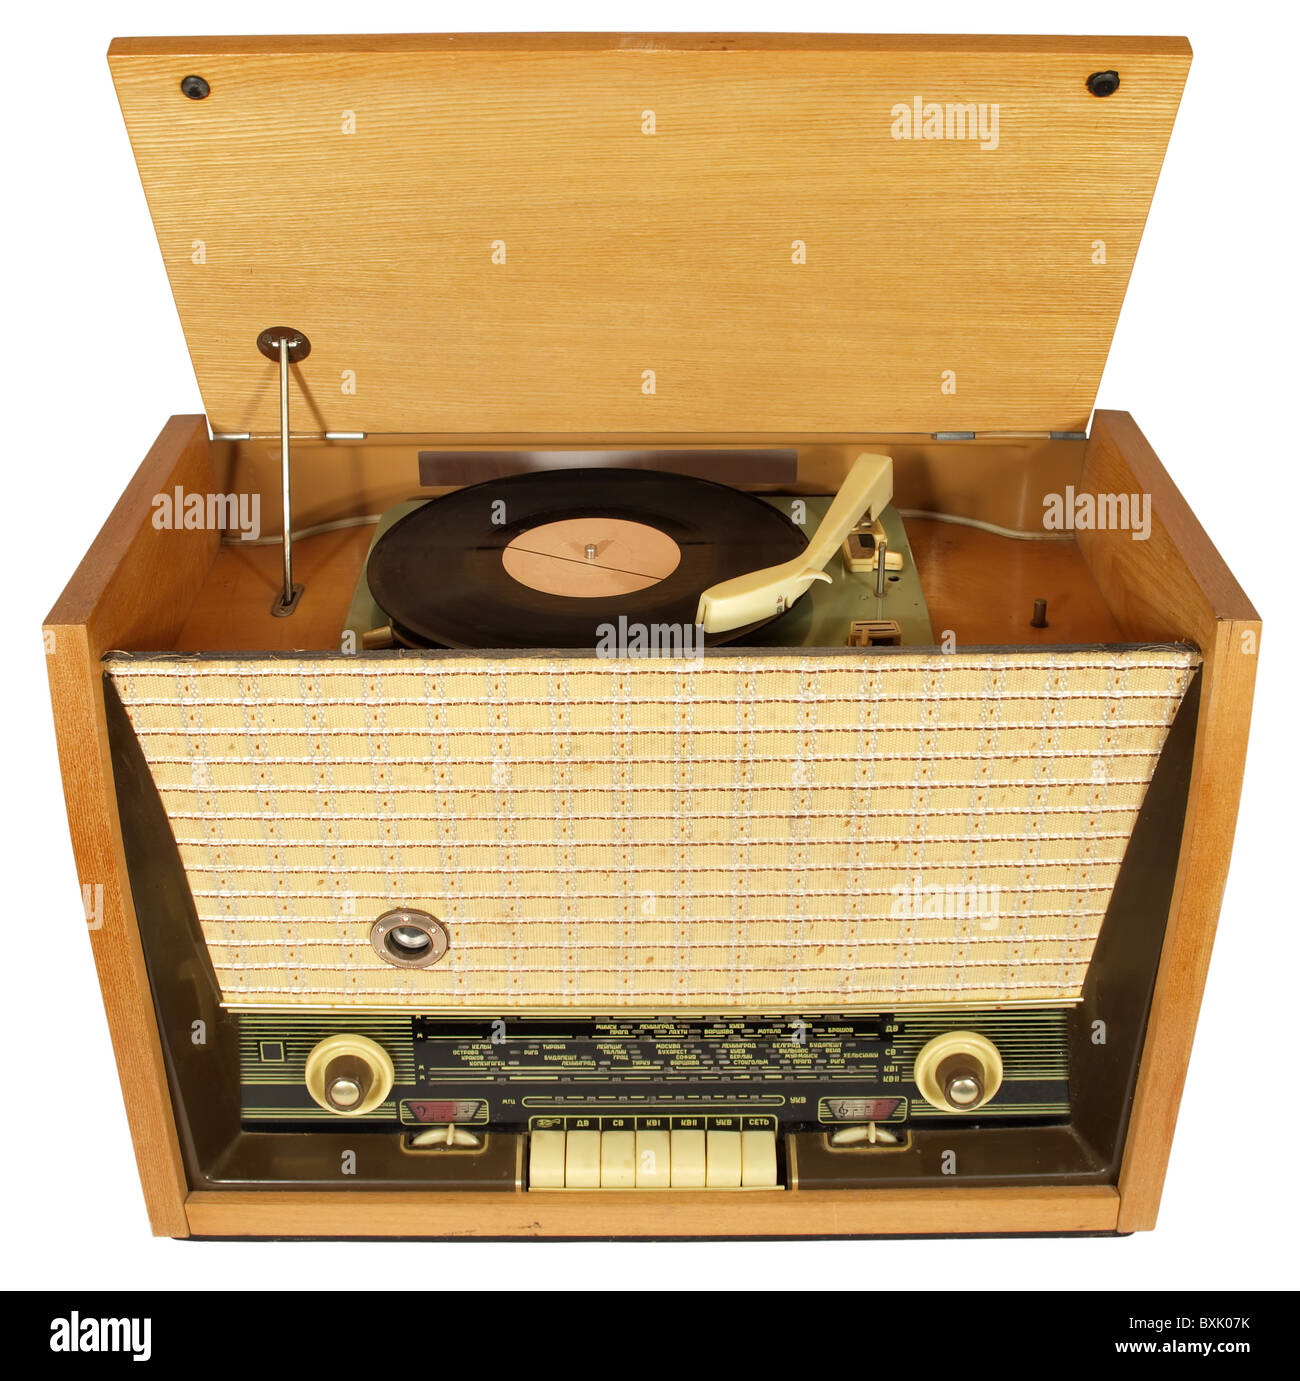 Radio gramophone -Fotos und -Bildmaterial in hoher Auflösung – Alamy